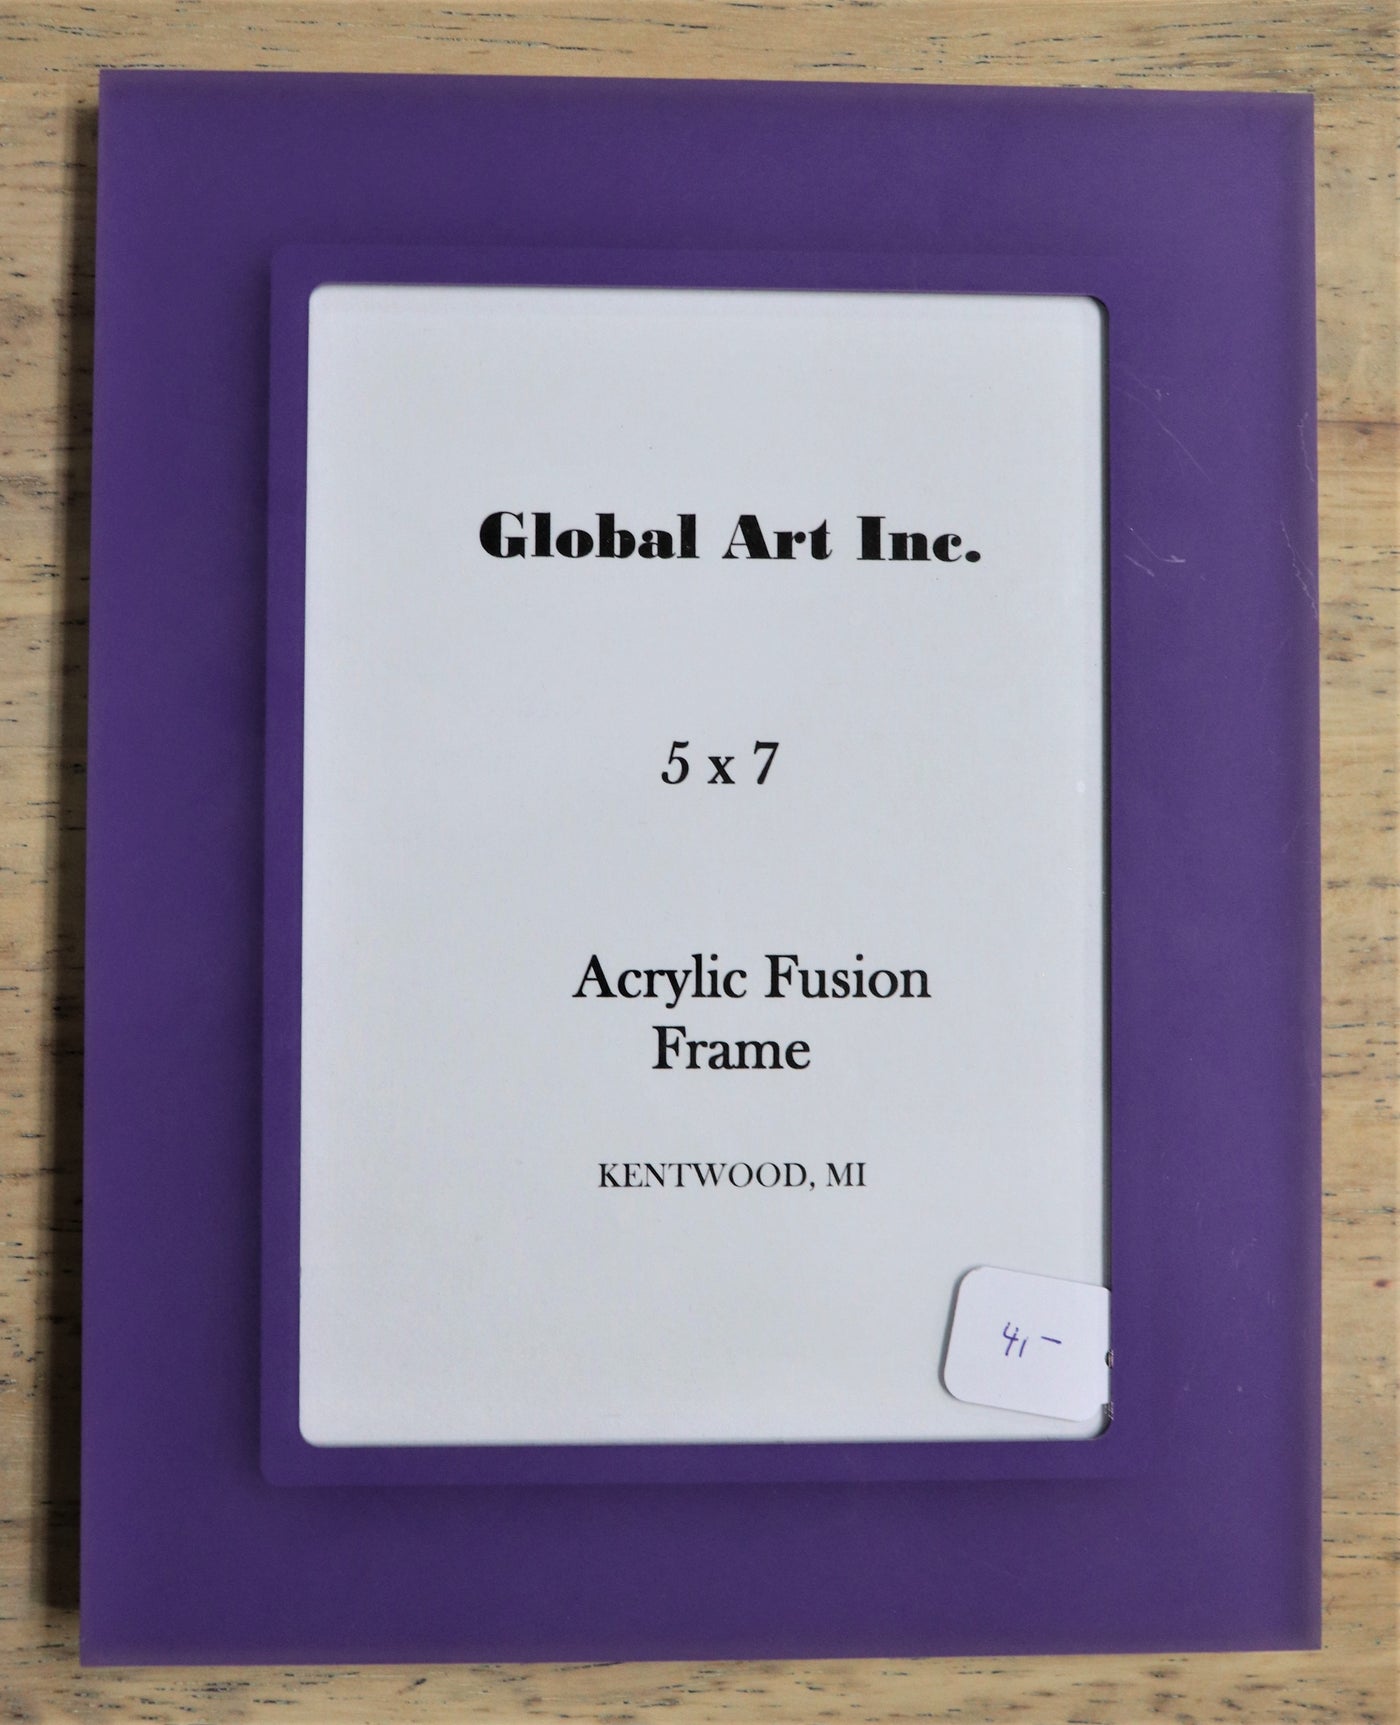 5" x 7" Purple Photo Frame- Global Art Inc.